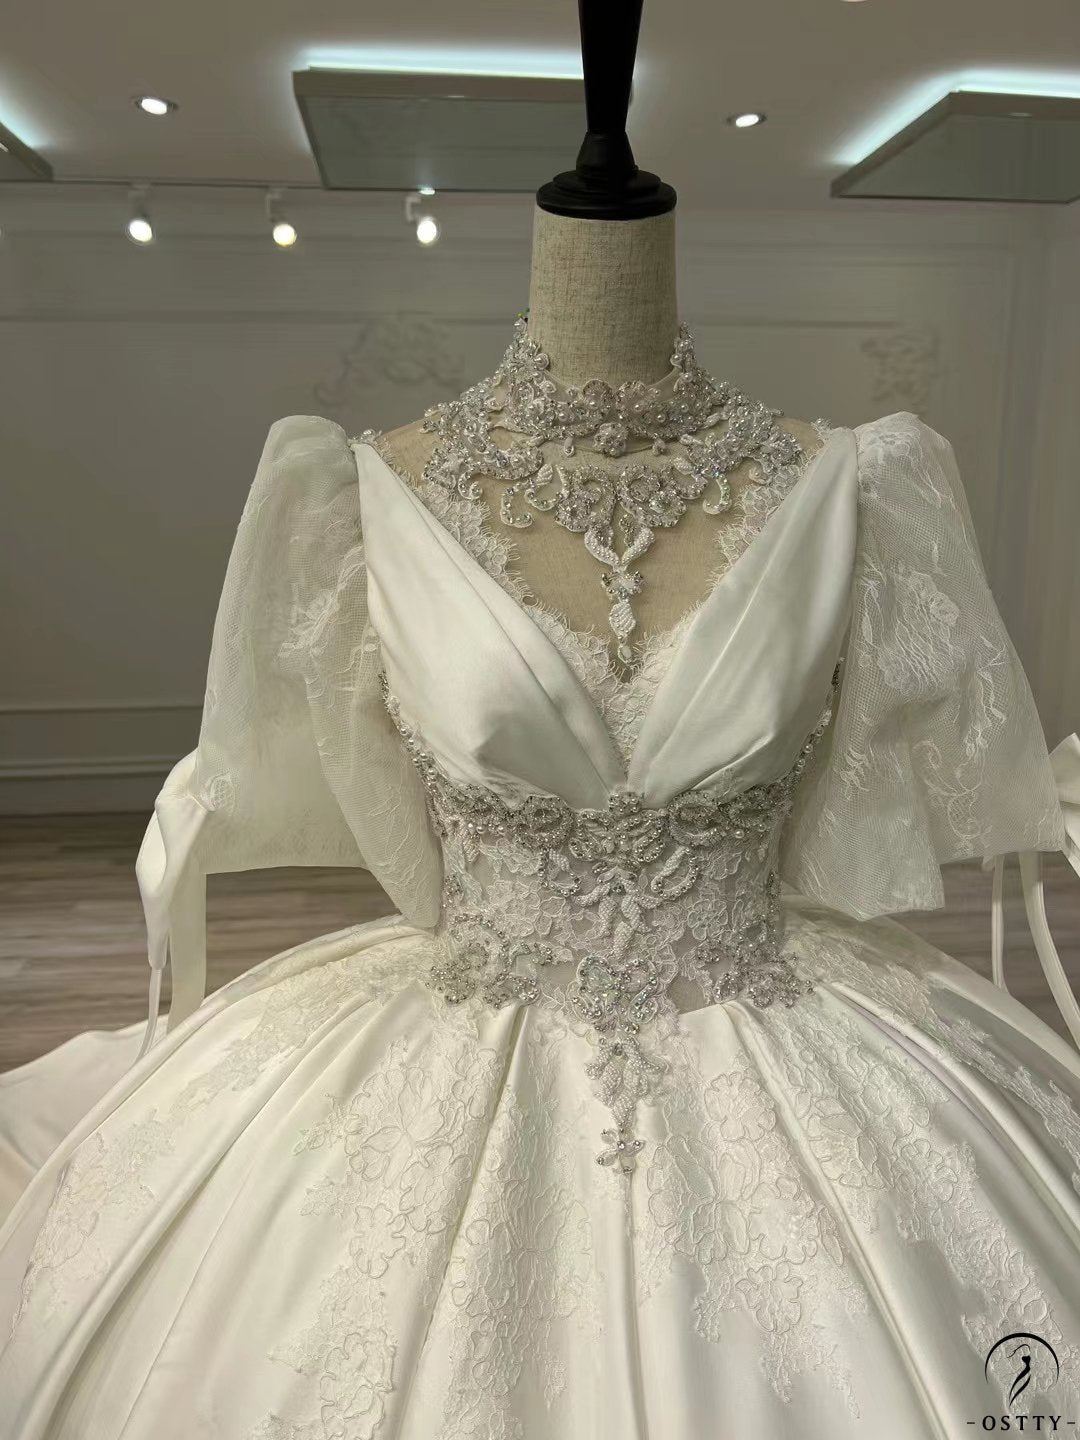 OSTTY - Luxury Satin Embroidered Short Sleeves Wedding Dresses OSL001  $899.99